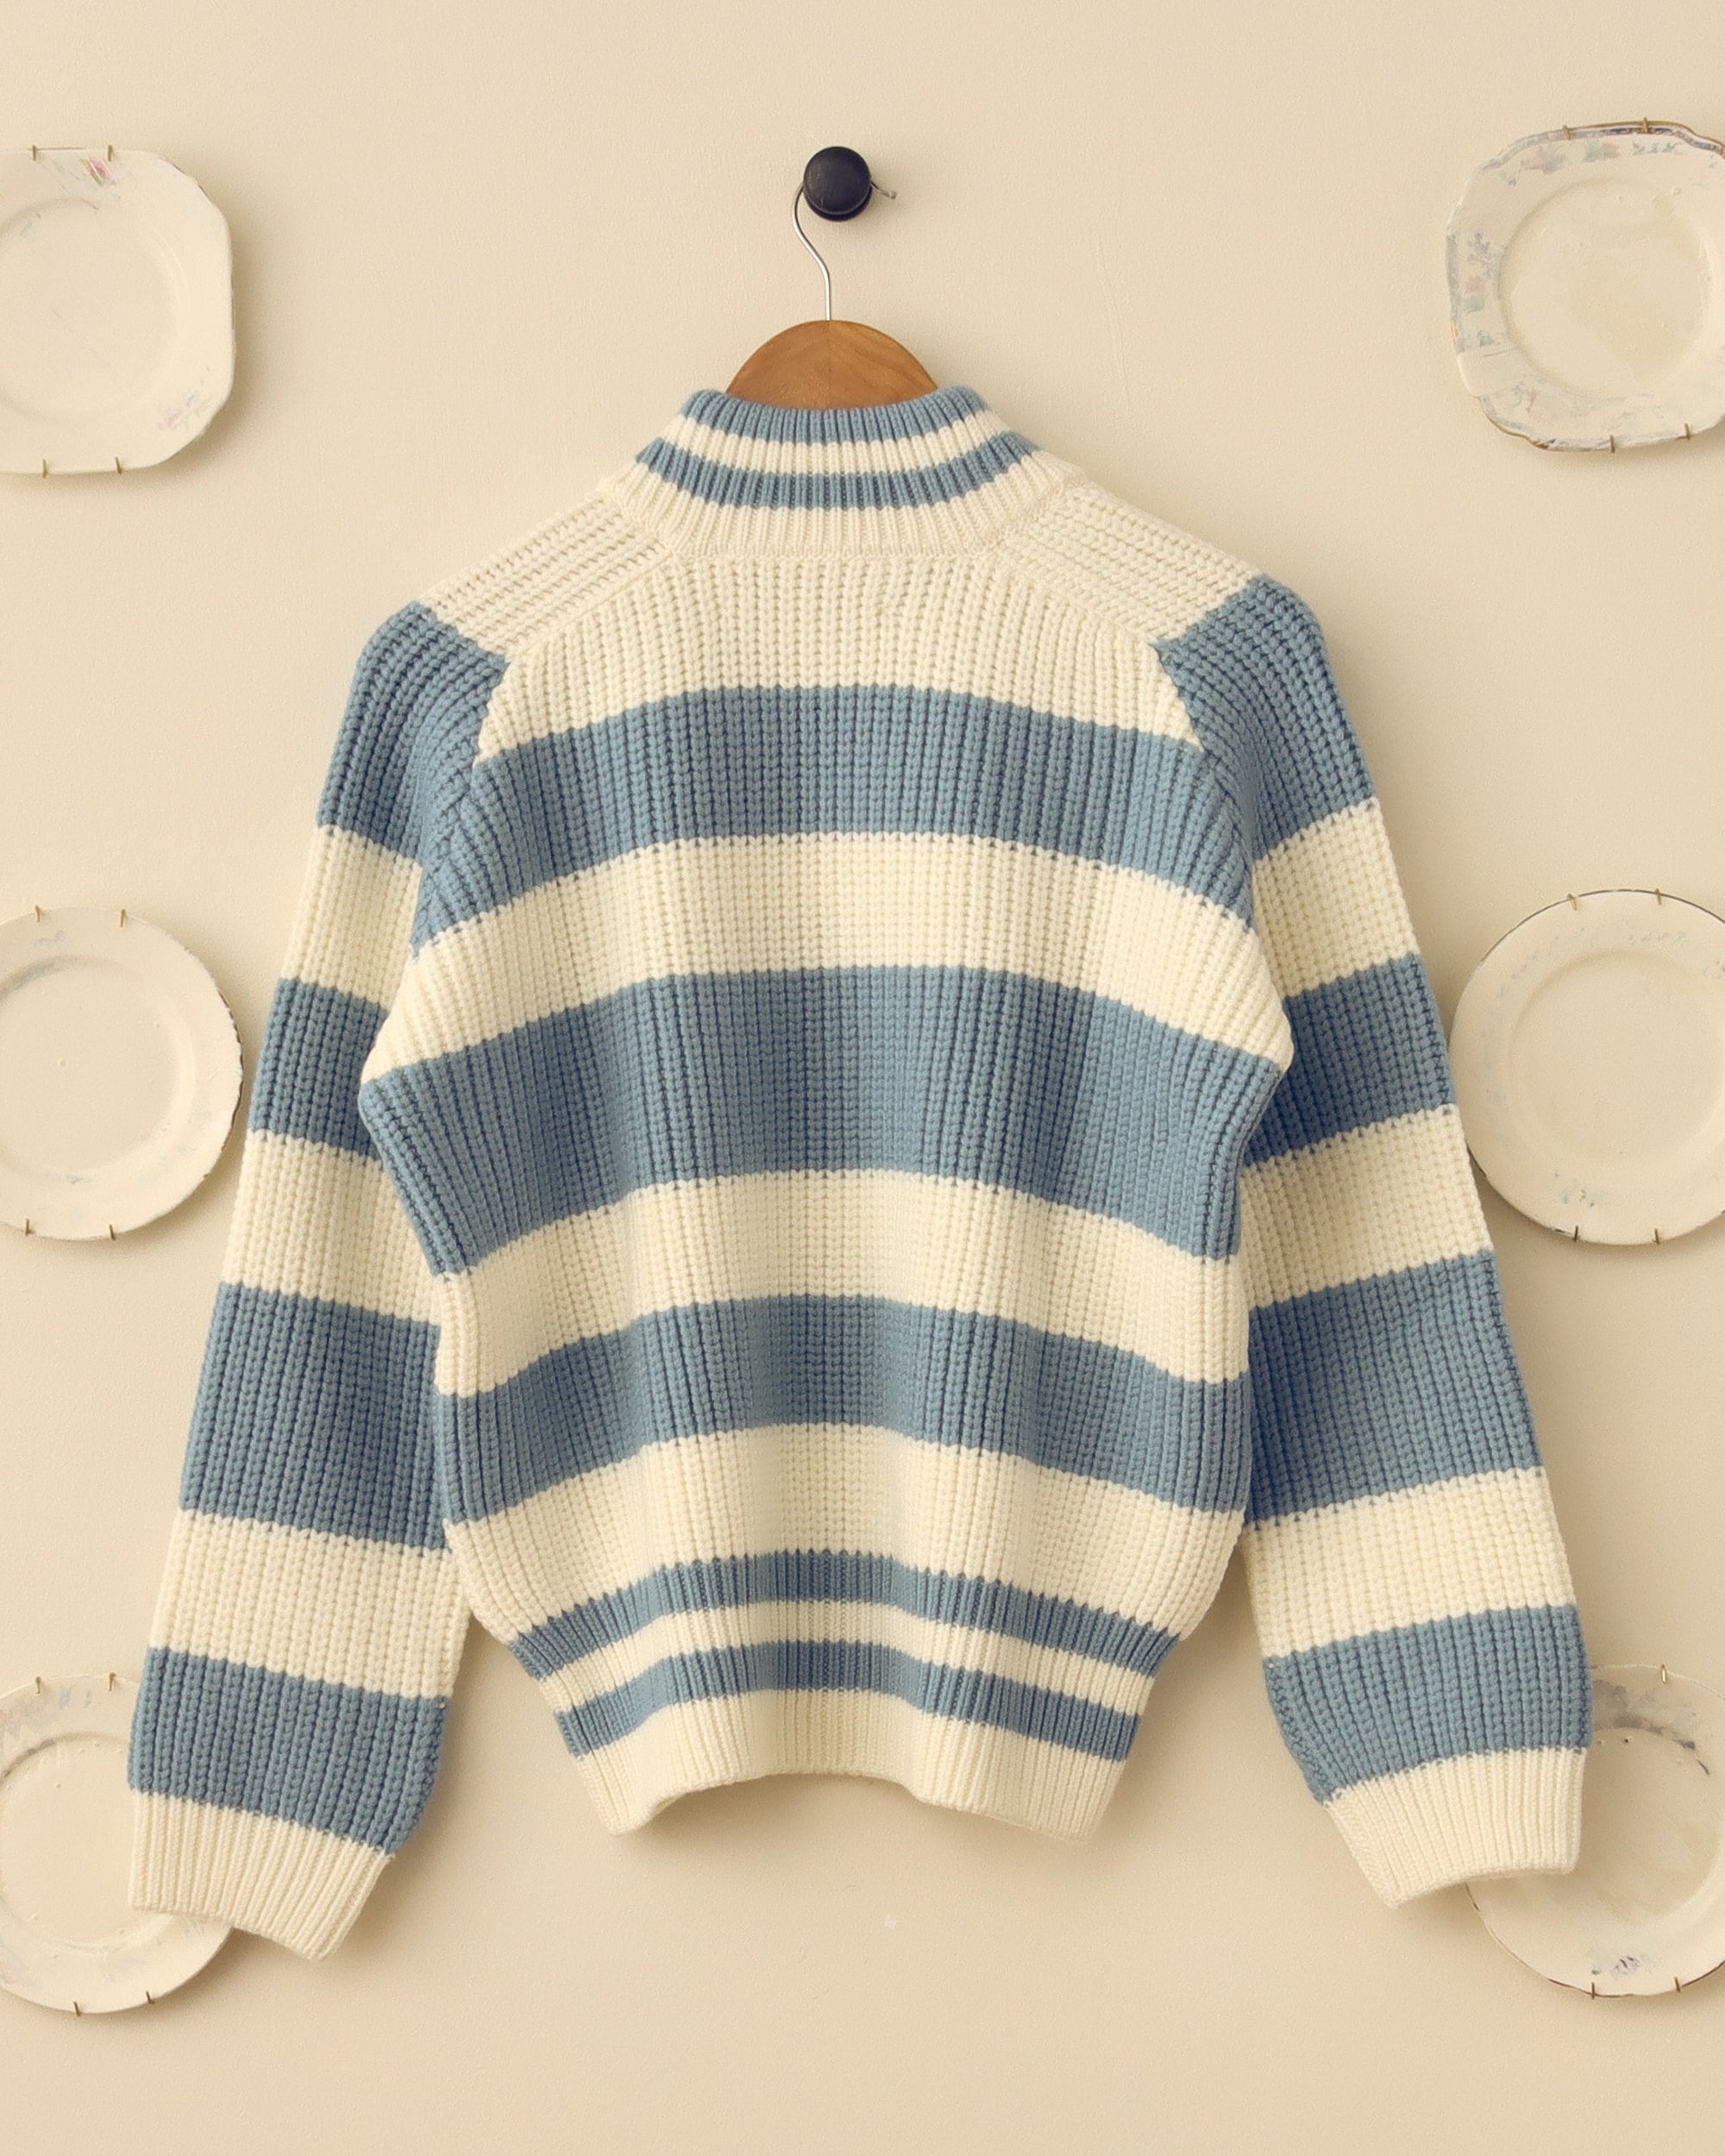 Lawrence Slashed Crewneck Sweater - Powder blue & Ecru — S.S.DALEY